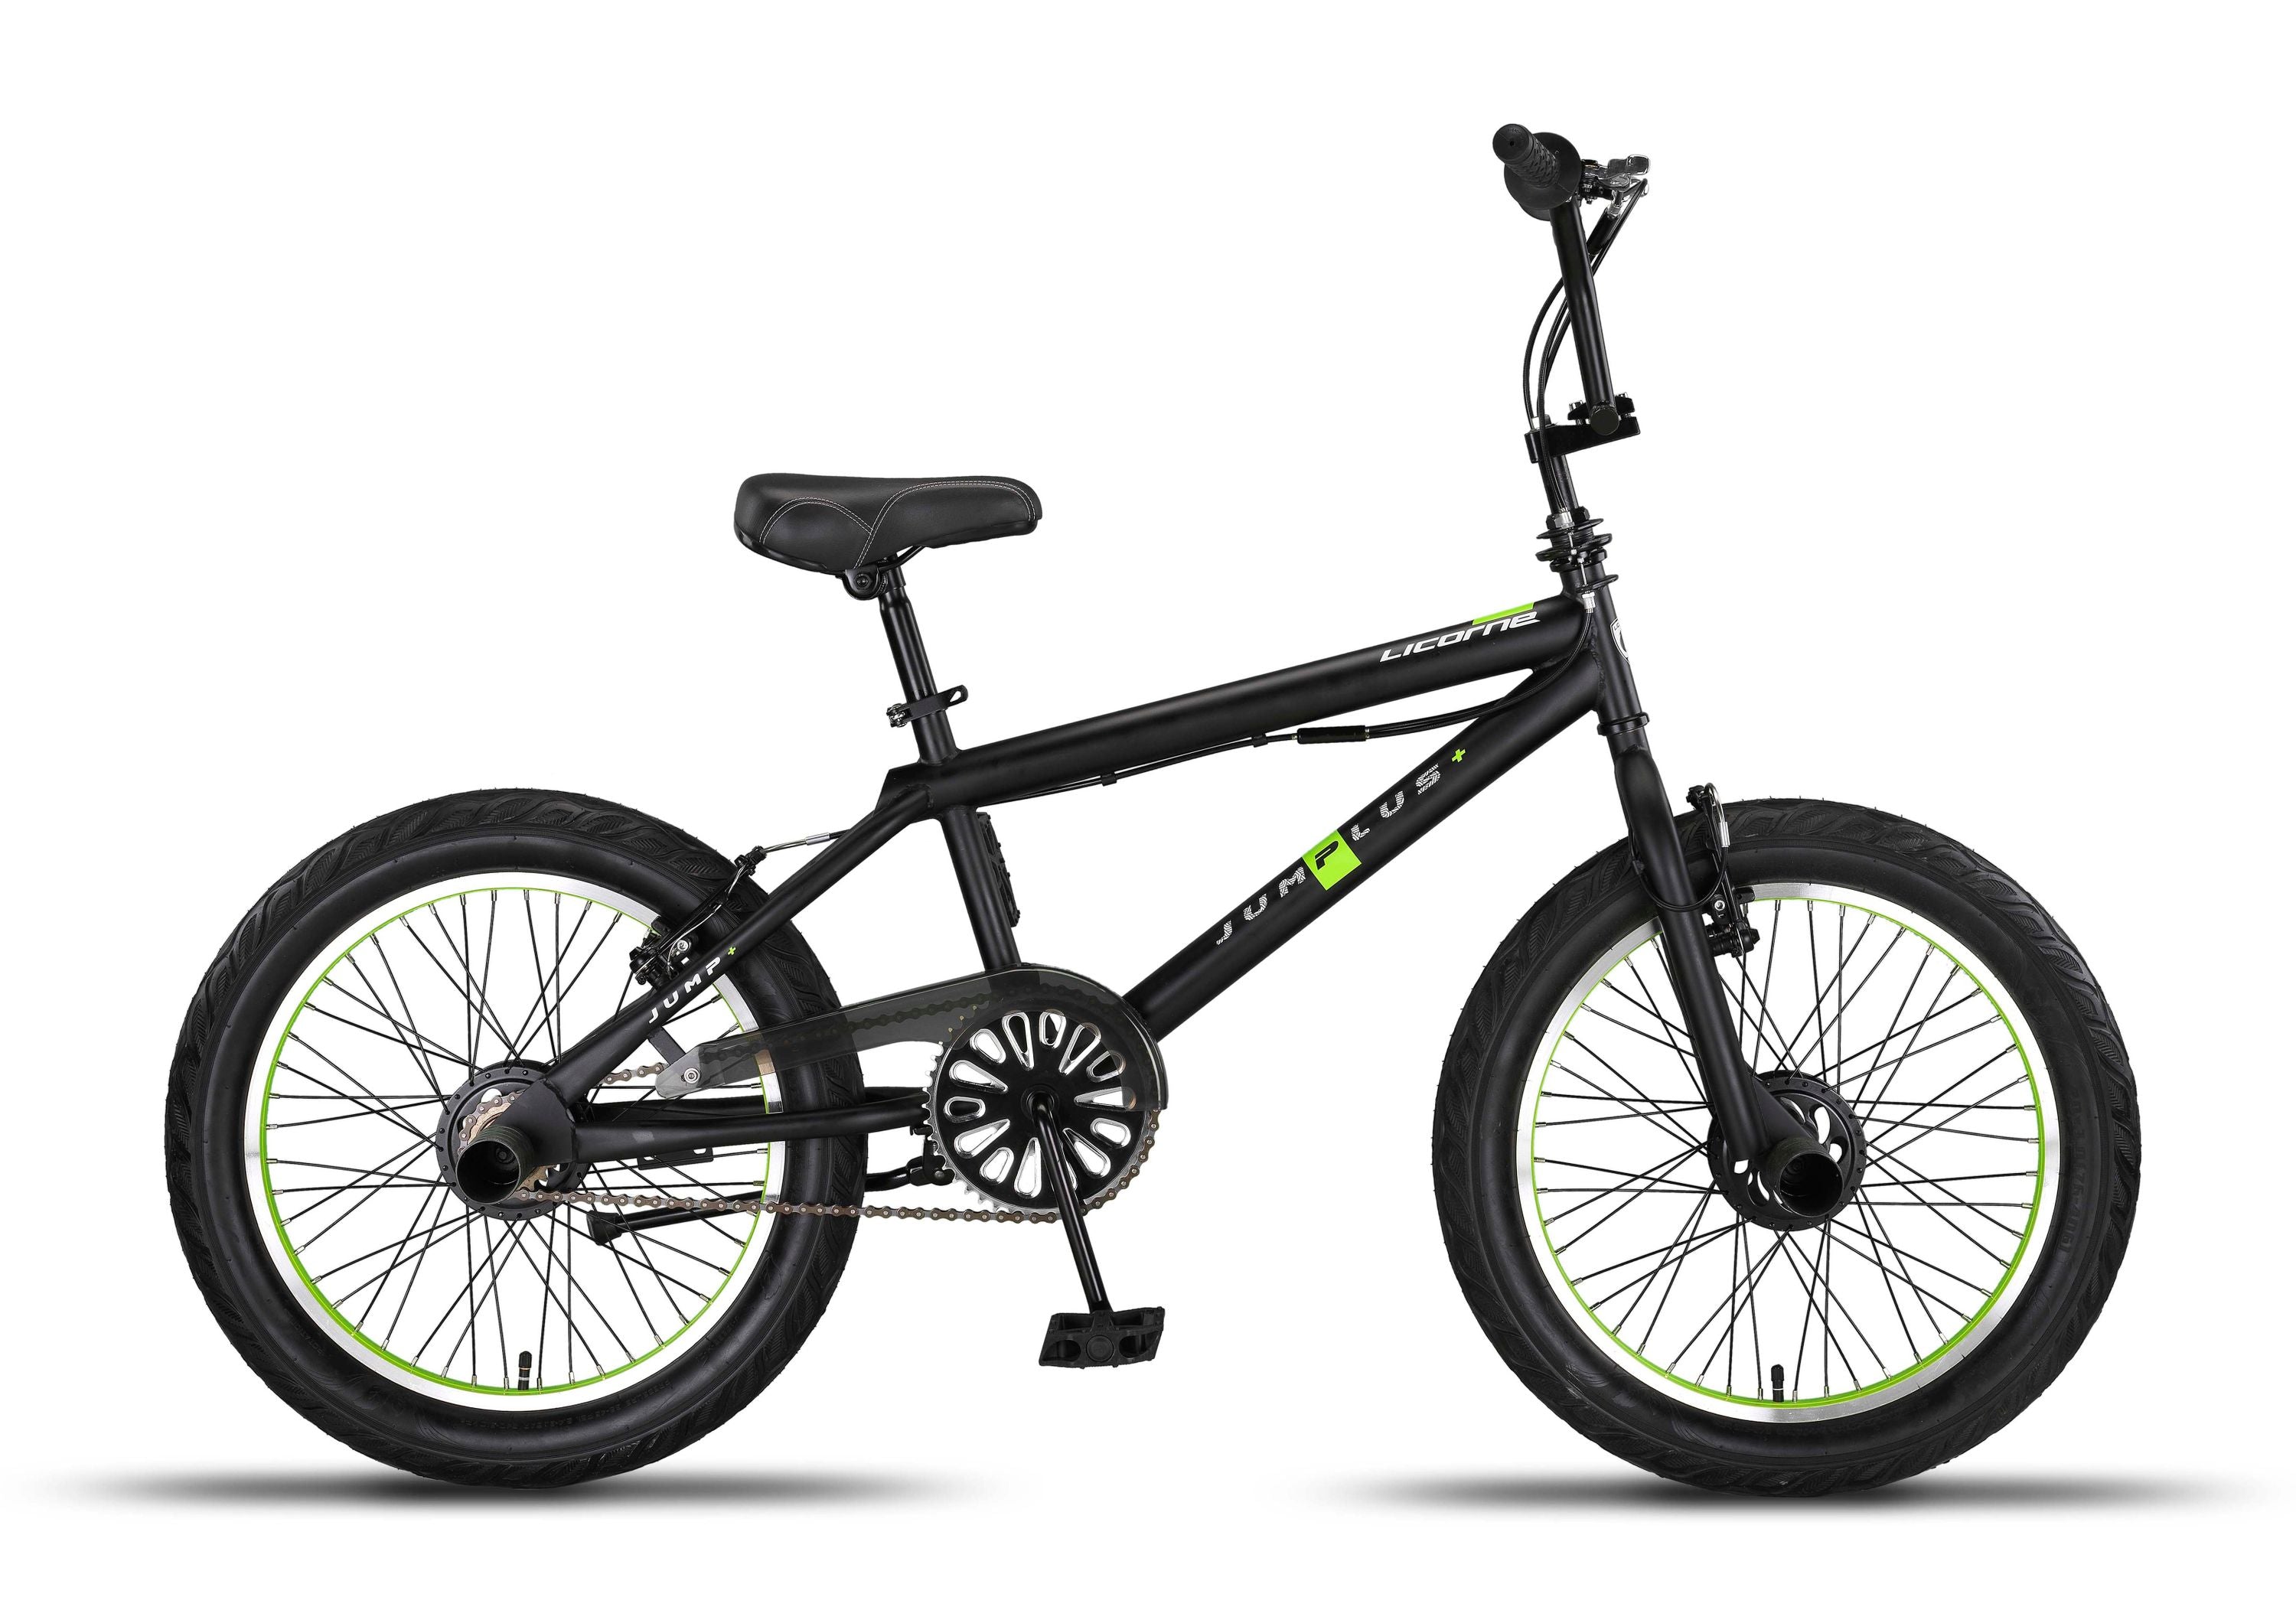 Licorne Bike Jump Premium BMX Sistema de rotor de 360°, 4 clavijas de acero, protector de cadena, rueda libre